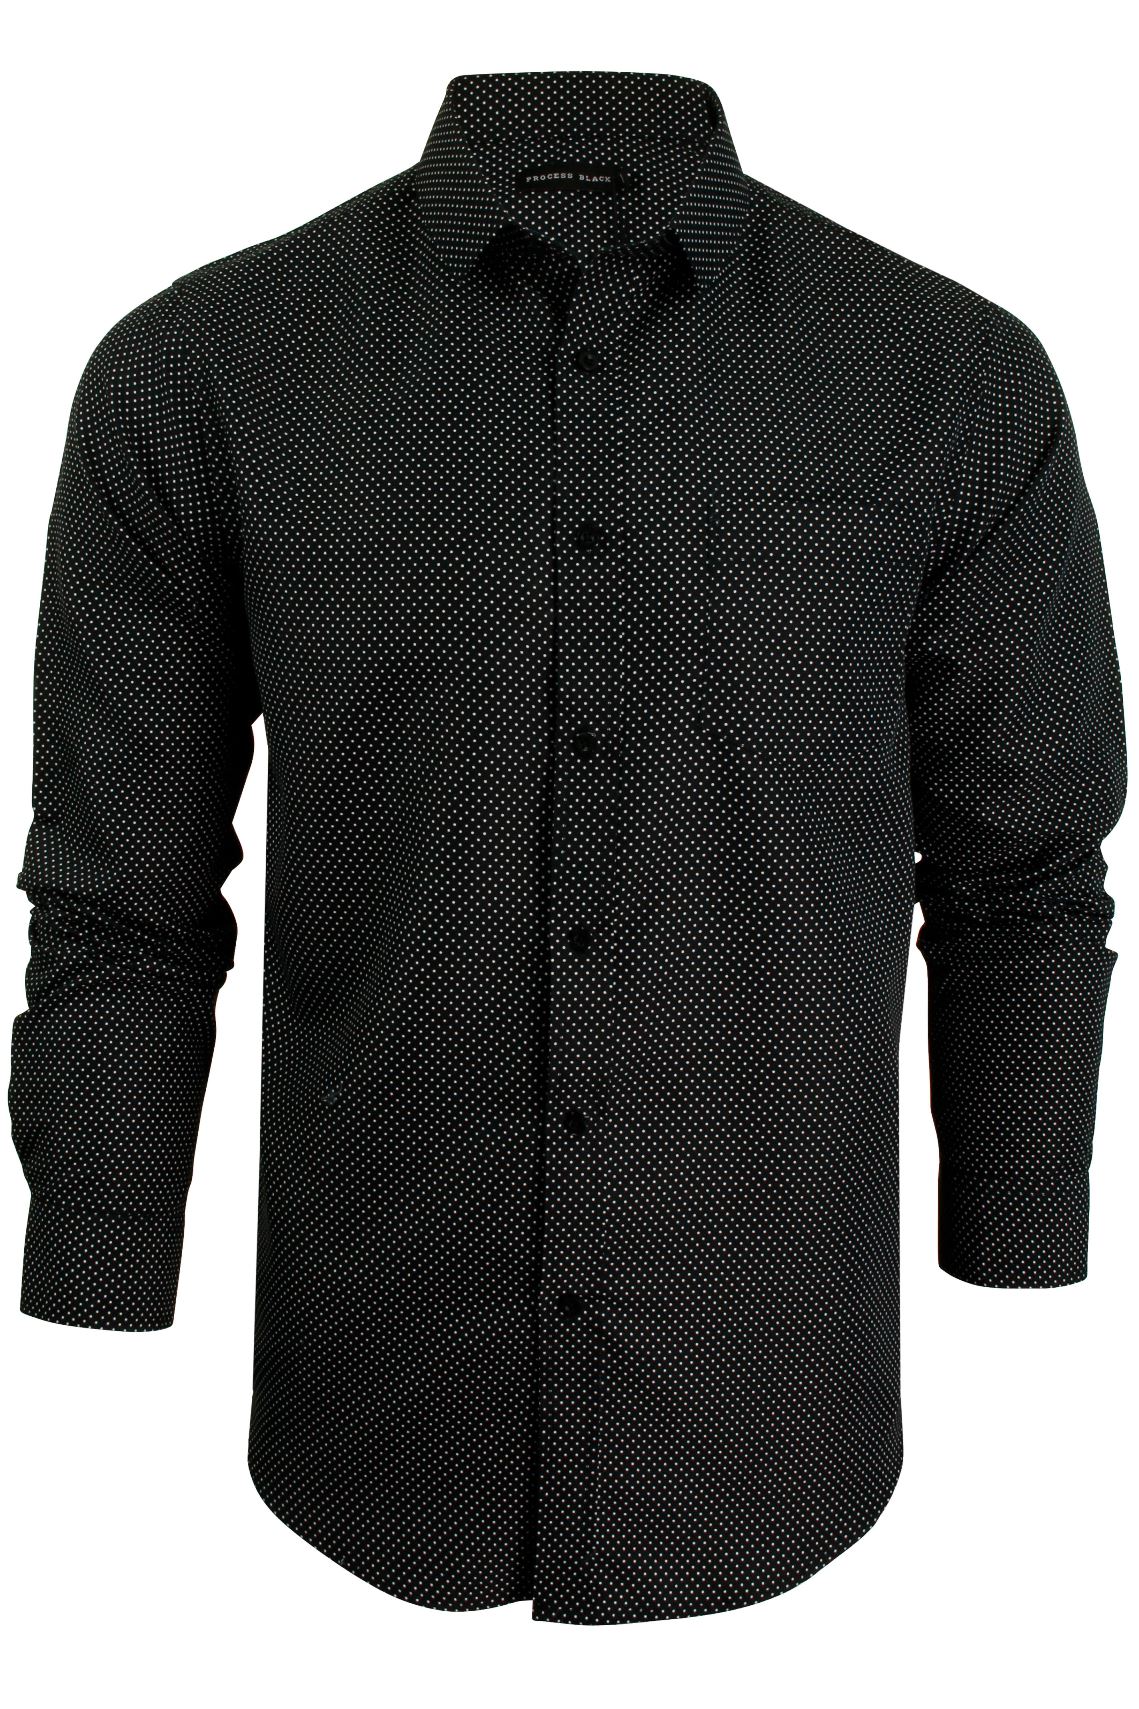 Mens Spotted Print Shirt by Process Black 'Cell' Long Sleeve Brave Soul, 01, Msh-Pb475Cell, Jet Black